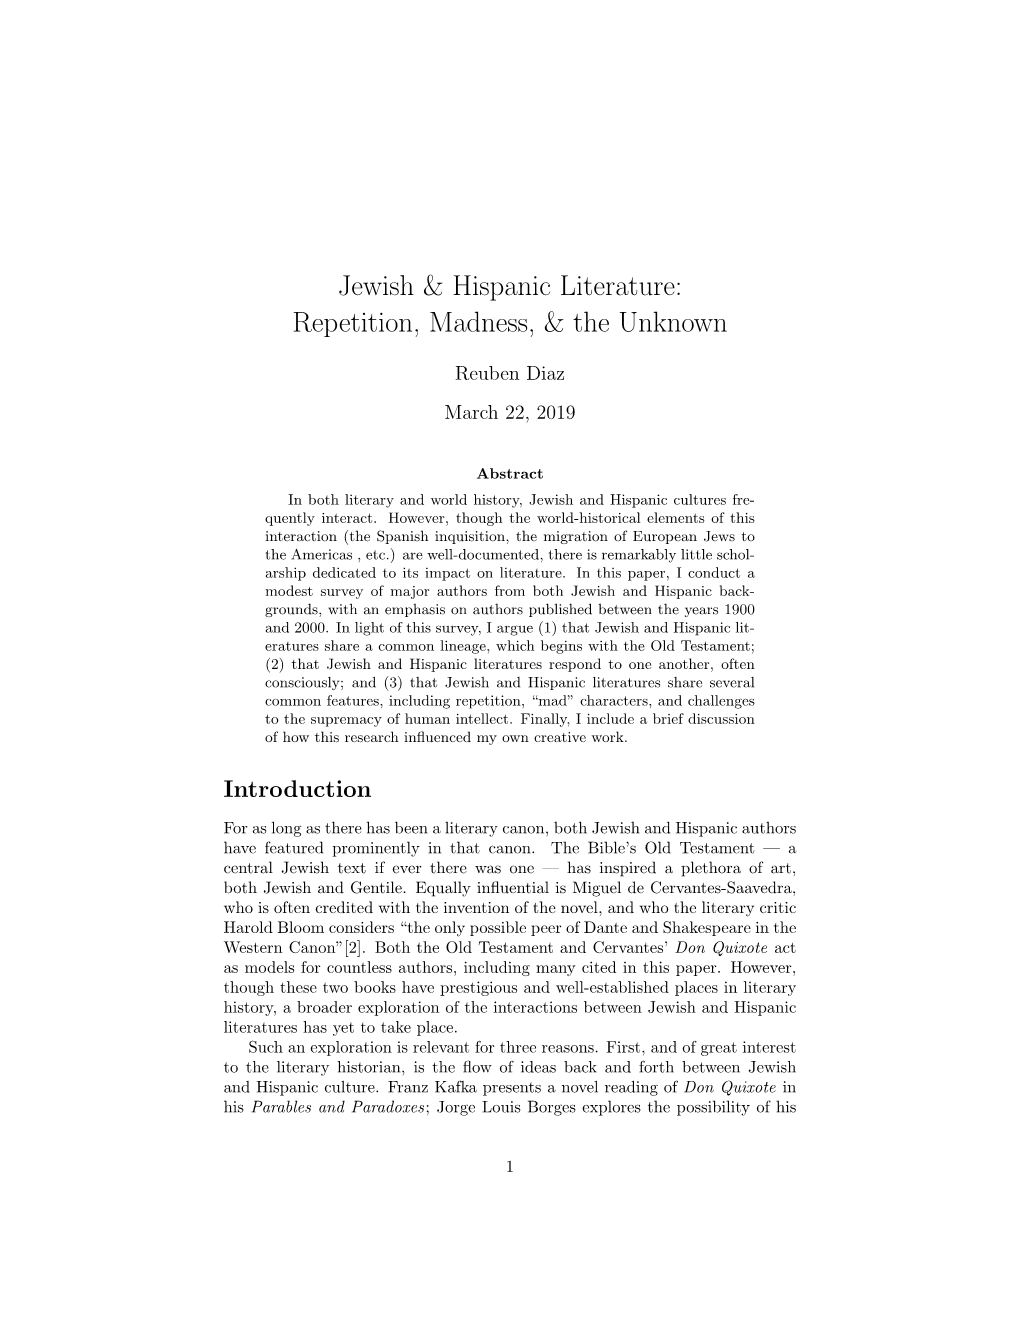 Jewish & Hispanic Literature: Repetition, Madness, & the Unknown